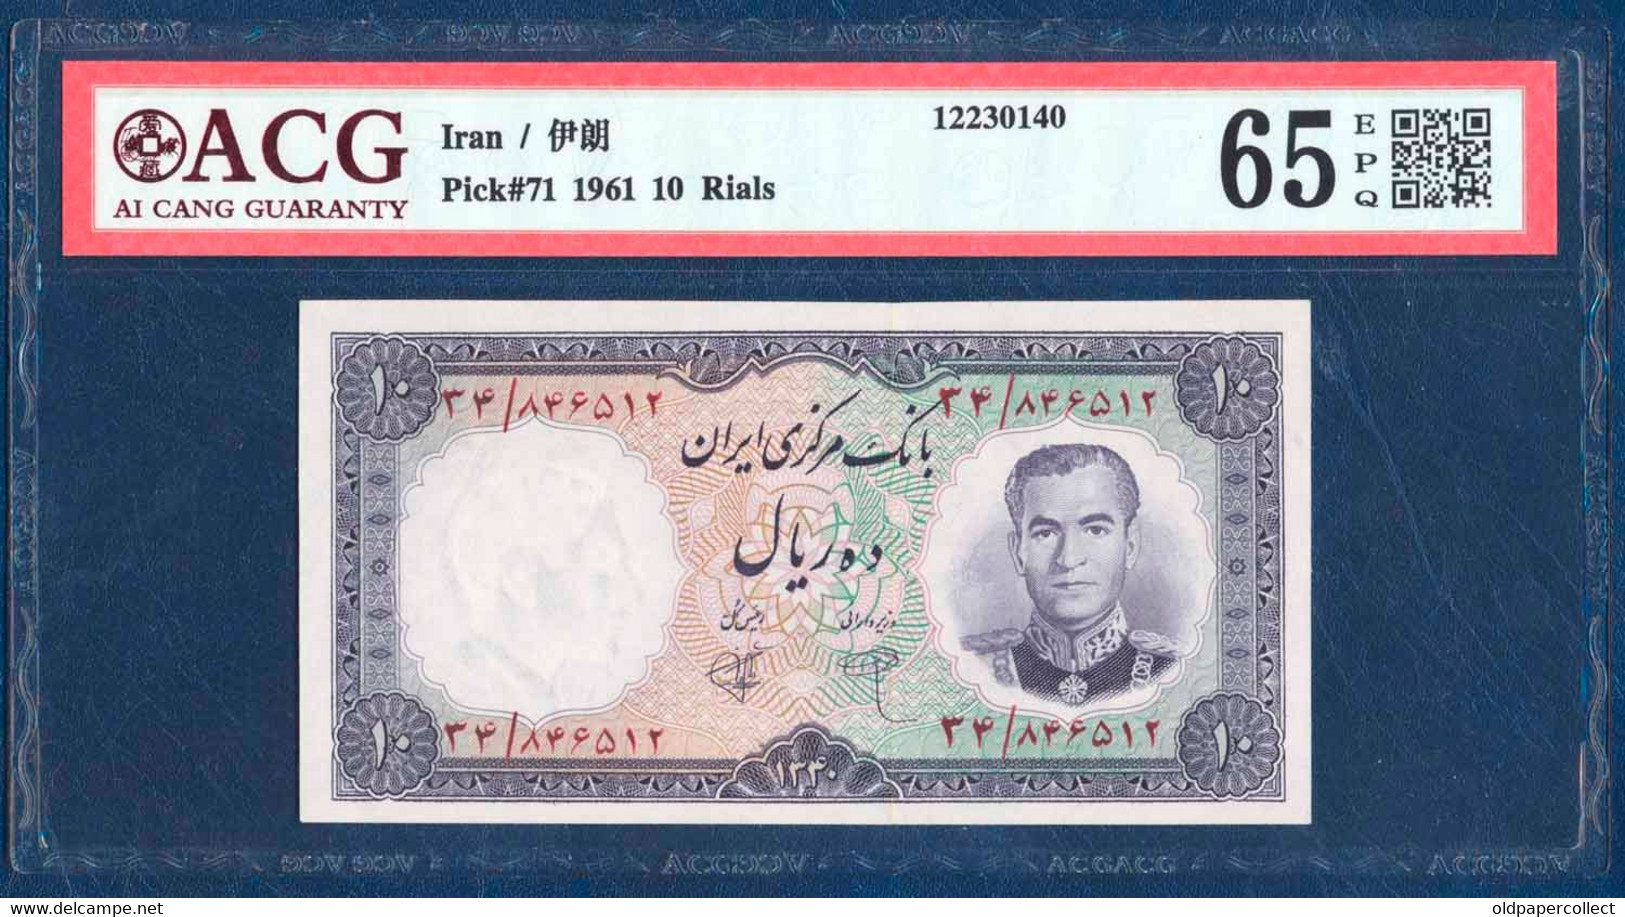 IRAN L'IRAN 10 RIALS Pick-71 Shah Reza Pahlavi / Amir Kabir Dam, Karaj 1961 ACG GRADING 65 EPQ - Iran